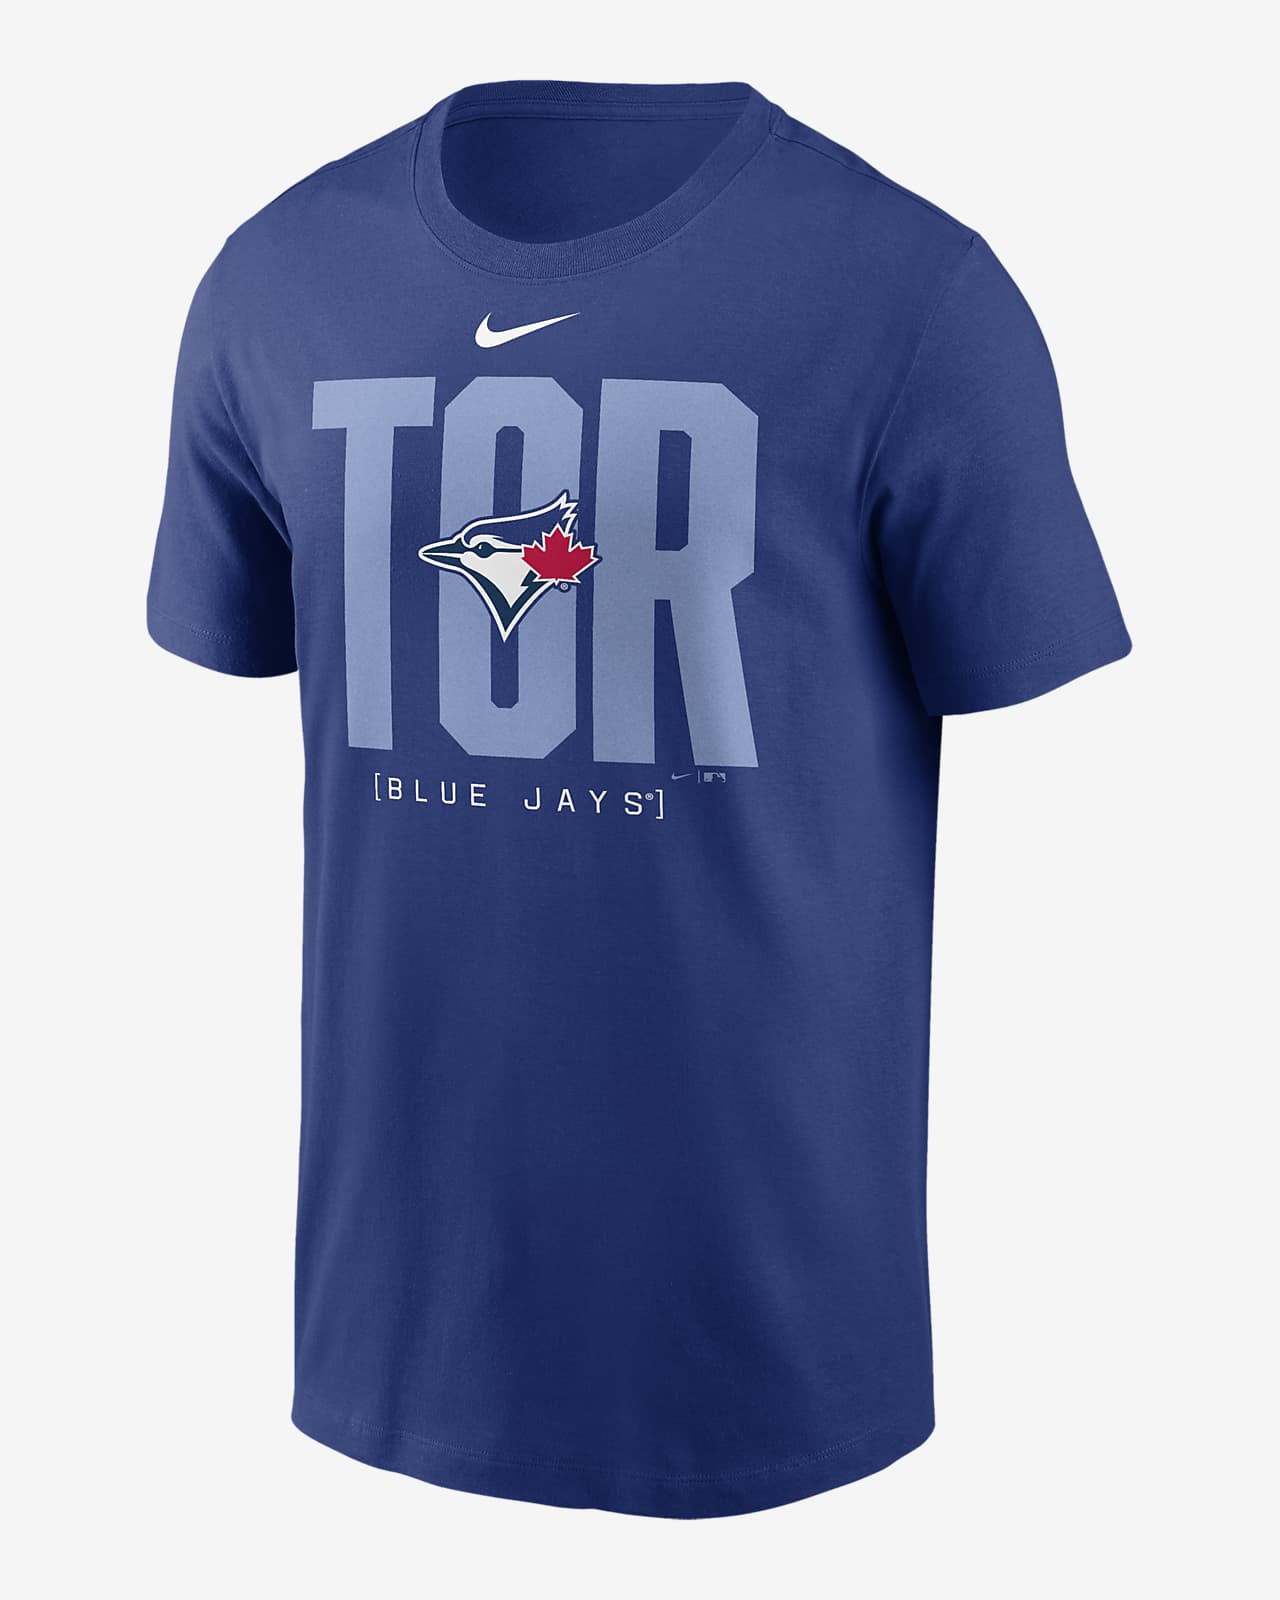 Playera Nike de la MLB para hombre Toronto Blue Jays Team Scoreboard